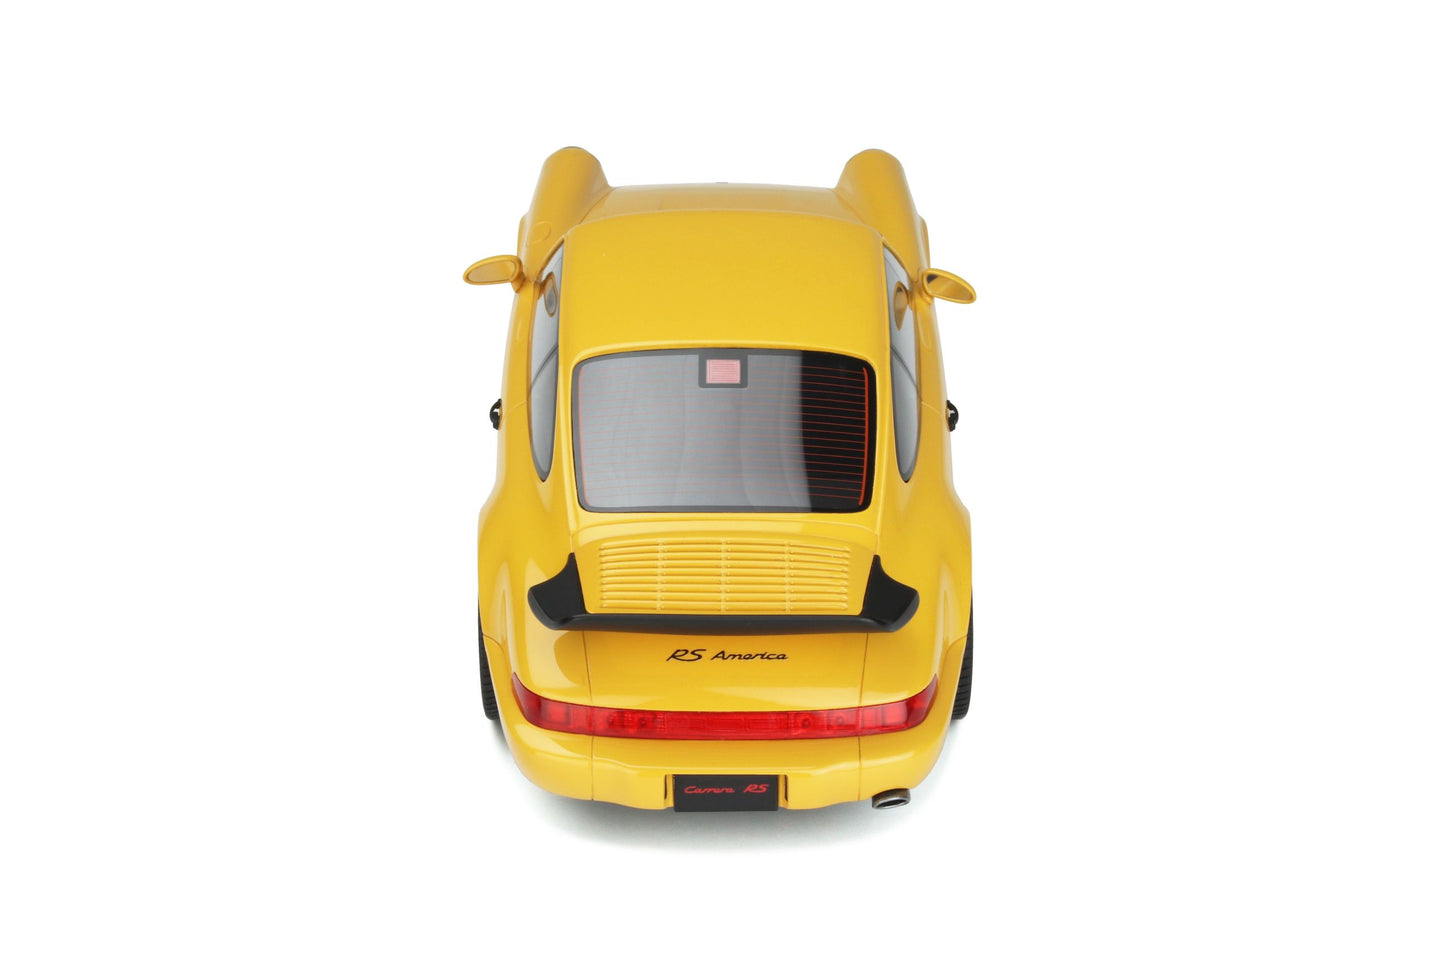 GT Spirit - Porsche 911 (964) Carrera RS America (Ferrari Fly Yellow) 1:18 Scale Model Car